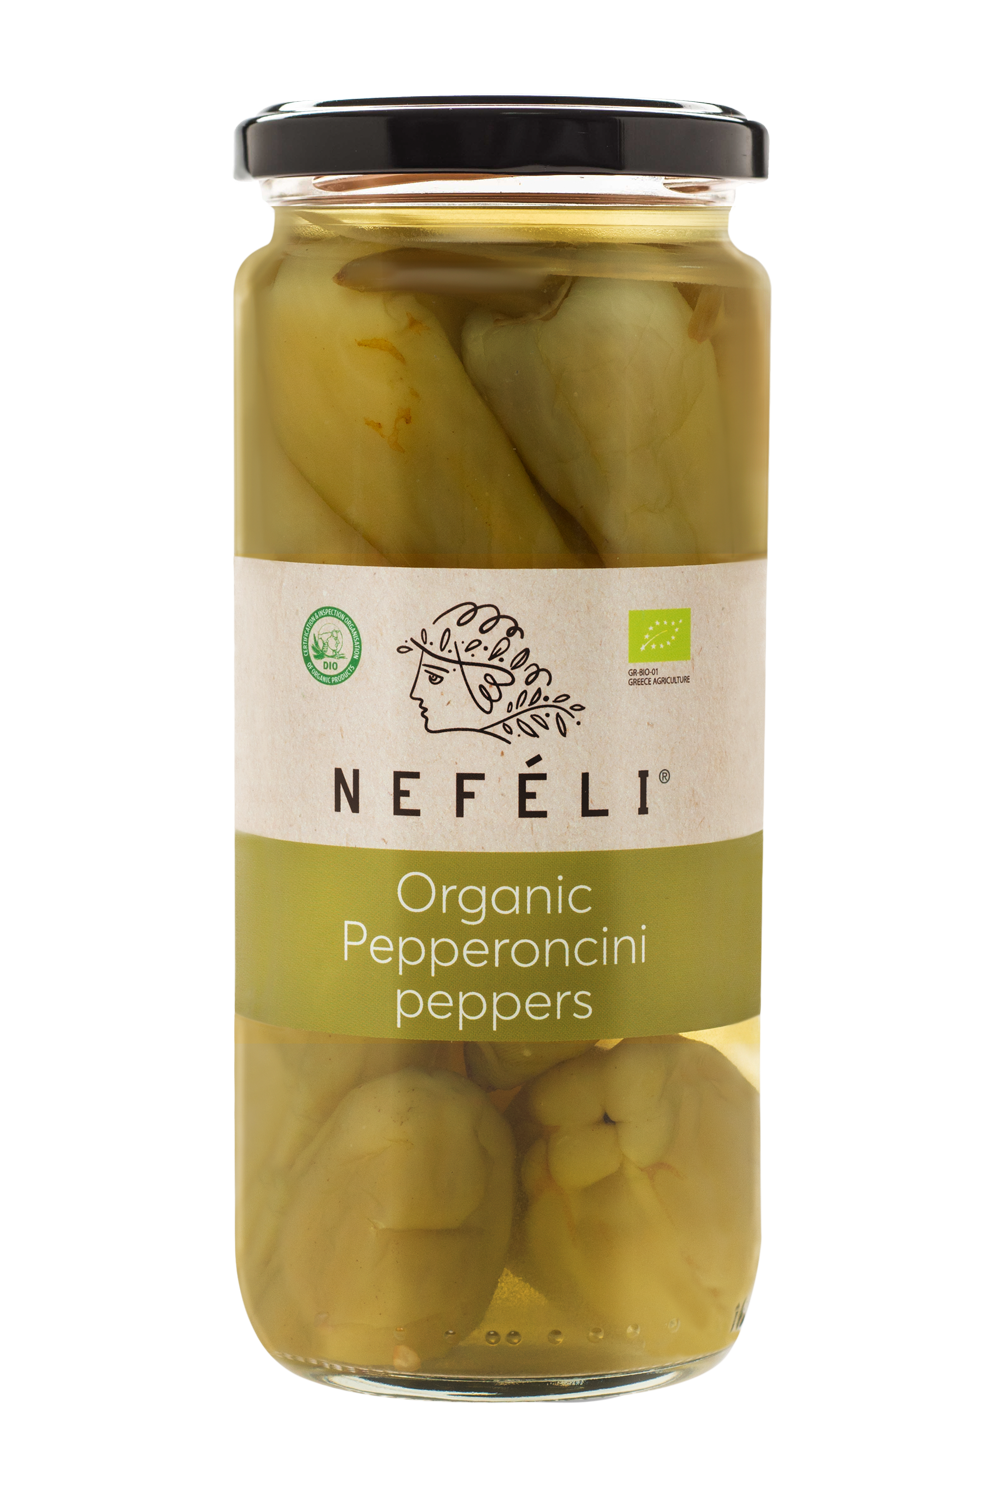 Organic pepperoncini green peppers